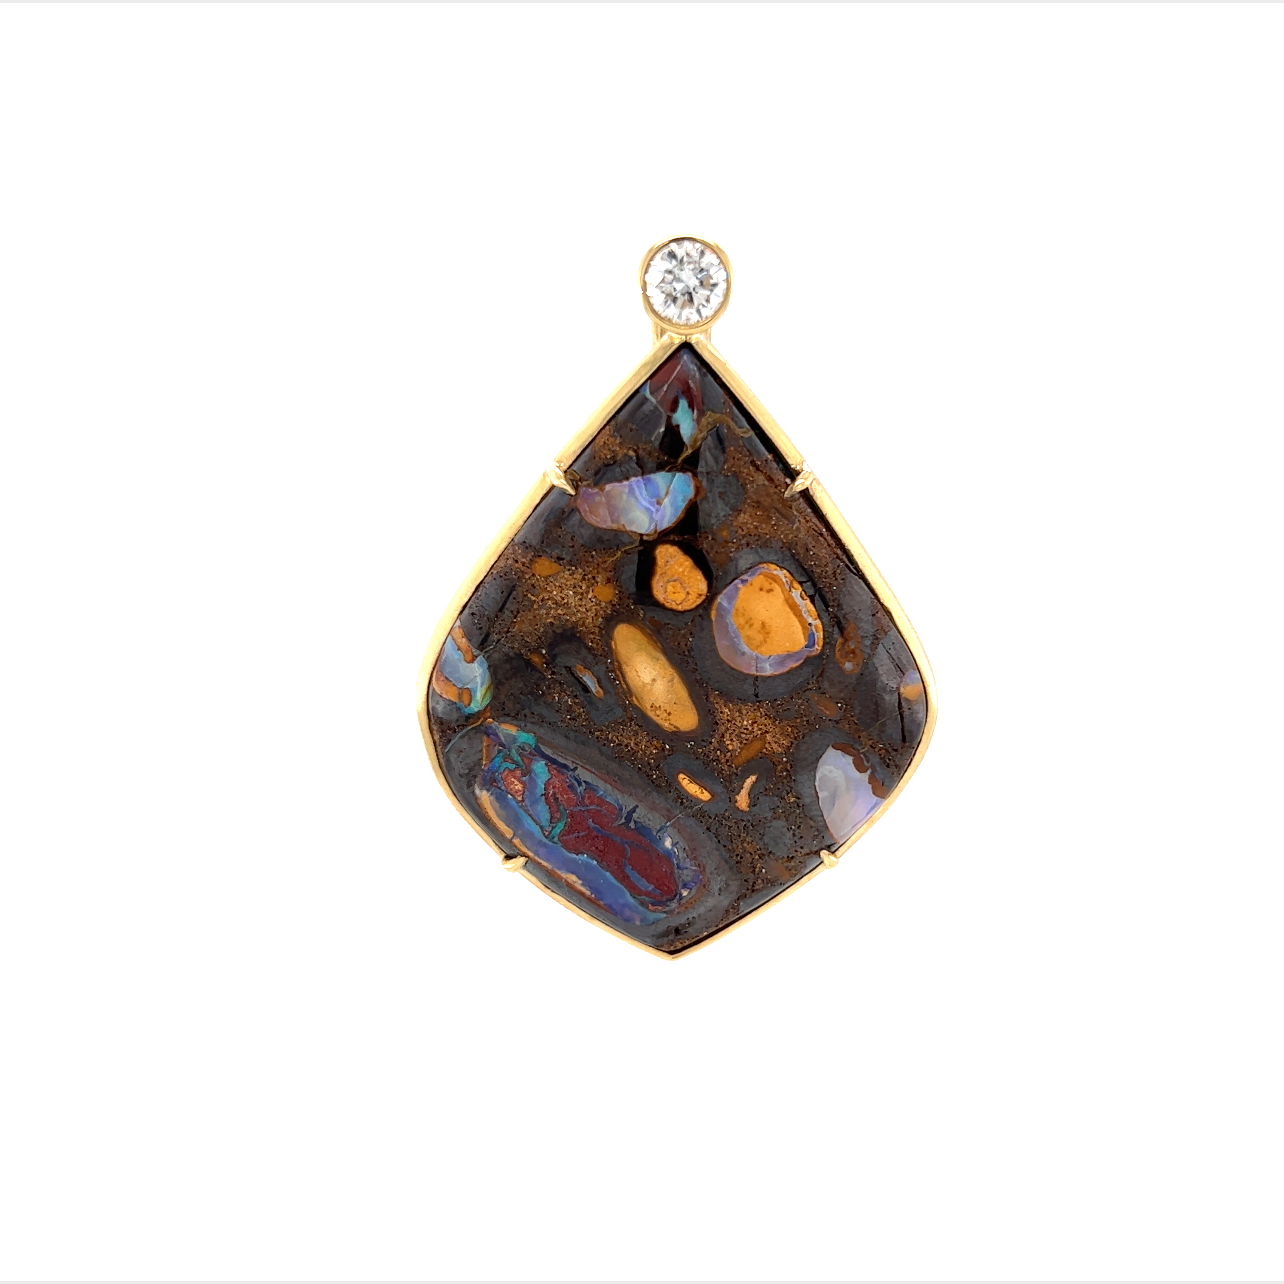 Featured image for “Australian Koroit Opal Pendant”